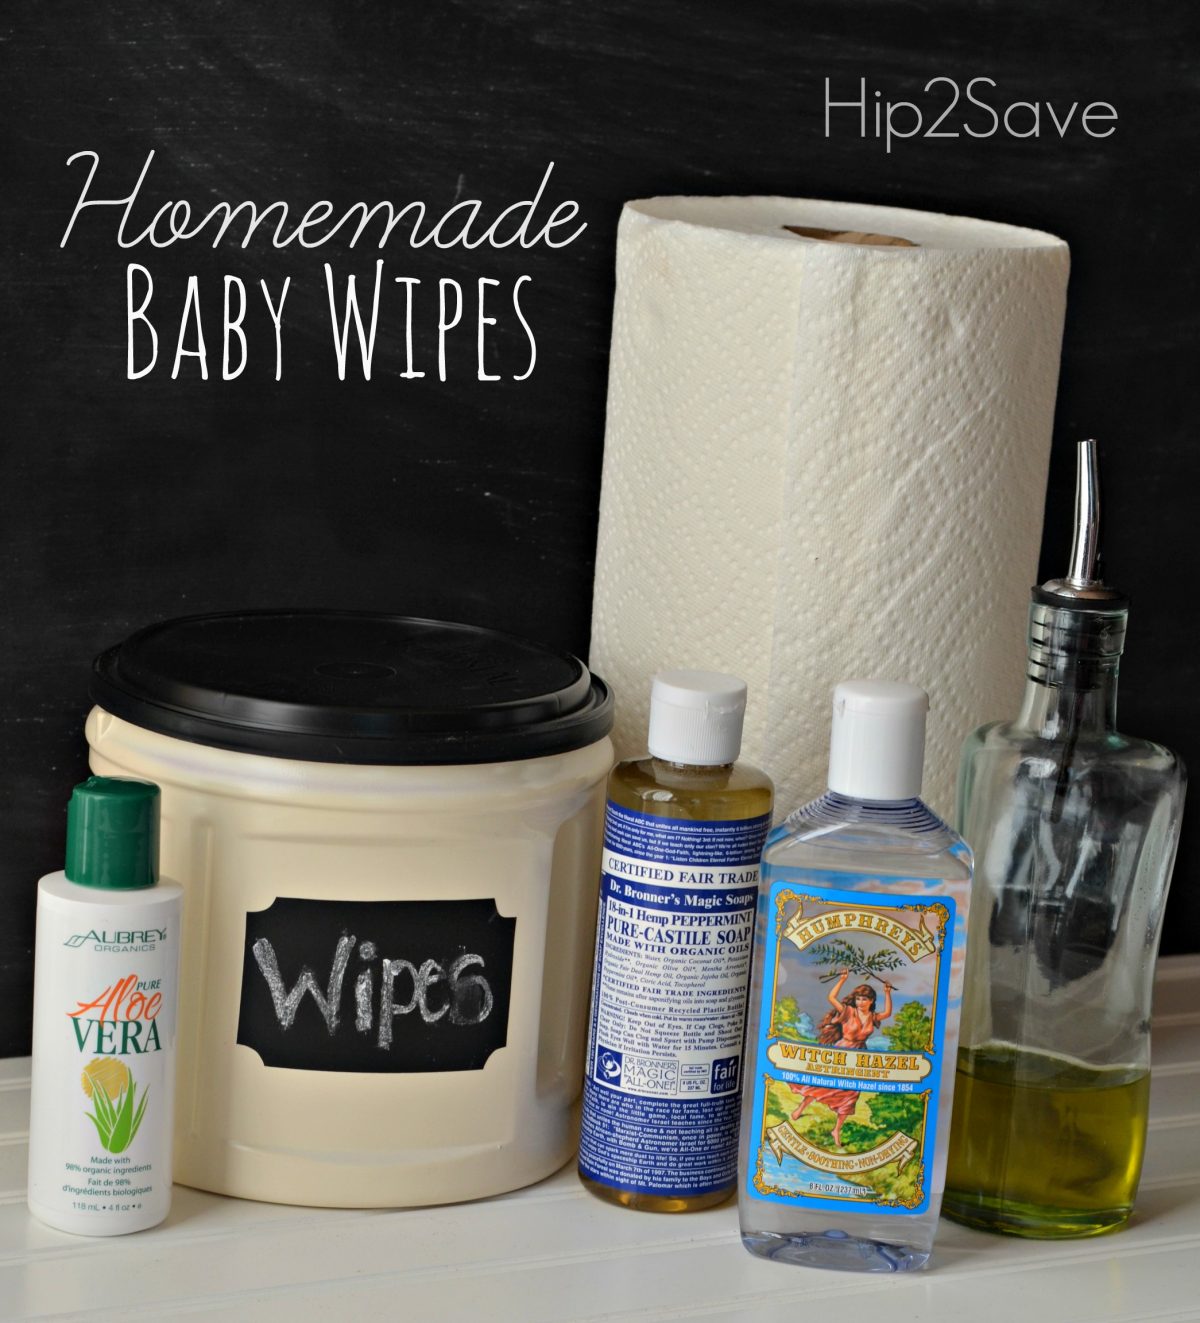 Homemade Baby Wipes Recipe - Hip2Save